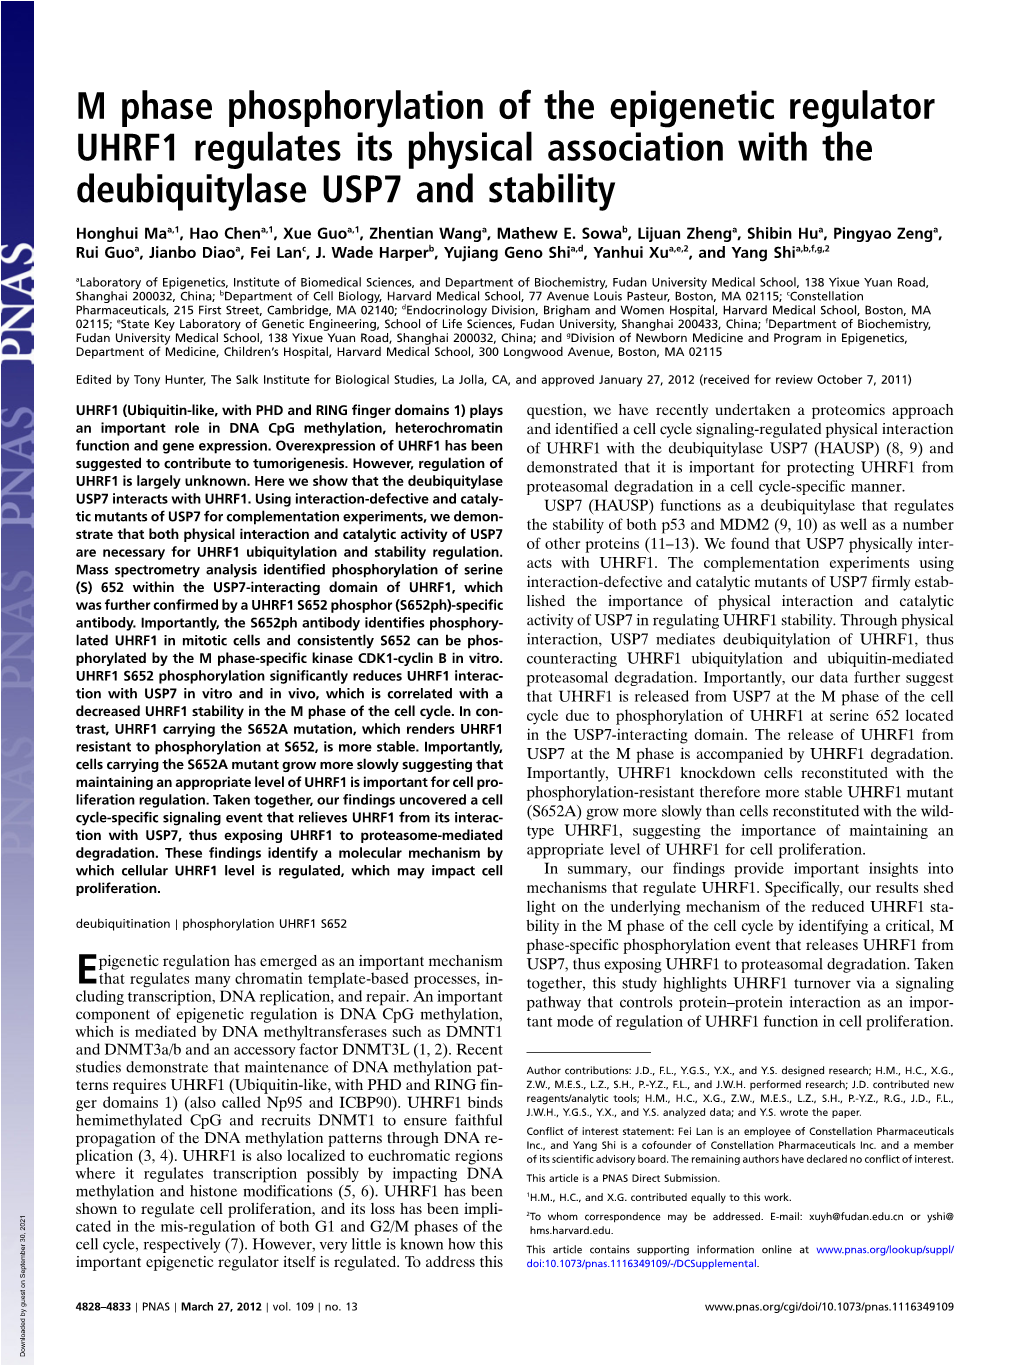 M Phase Phosphorylation of the Epigenetic Regulator UHRF1 Regulates Its Physical Association with the Deubiquitylase USP7 and Stability